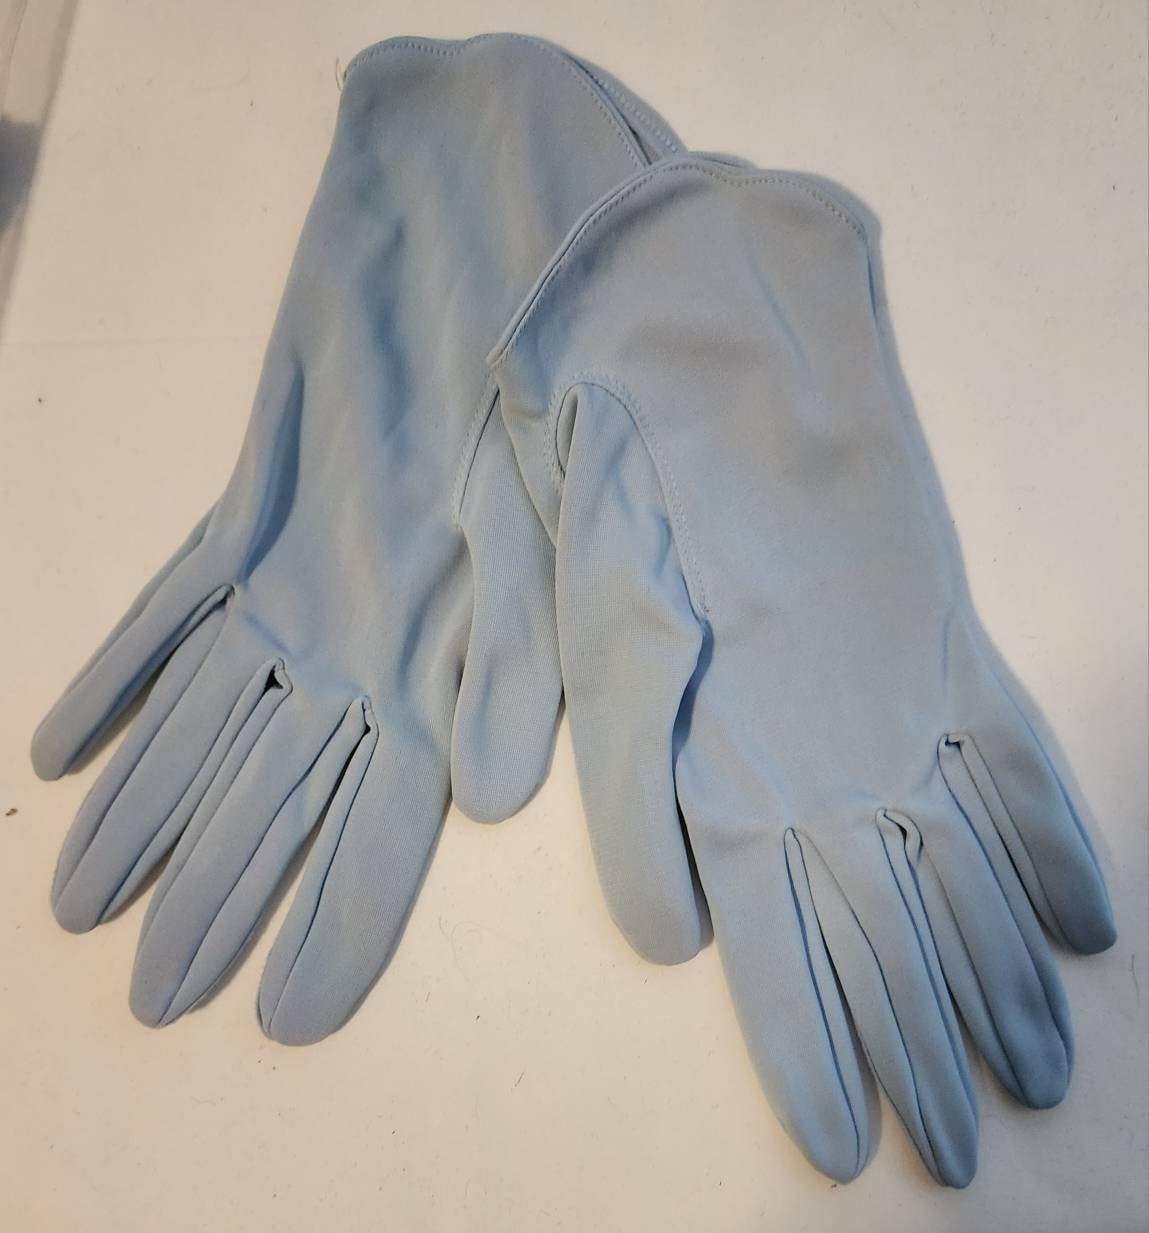 Vintage Blue Gloves 1950s 60s Periwinkle Blue Nylon Stretch Fabric Wrist Gloves Stylized Petals Mid Century Rockabilly Boho 7.5 to 8.5